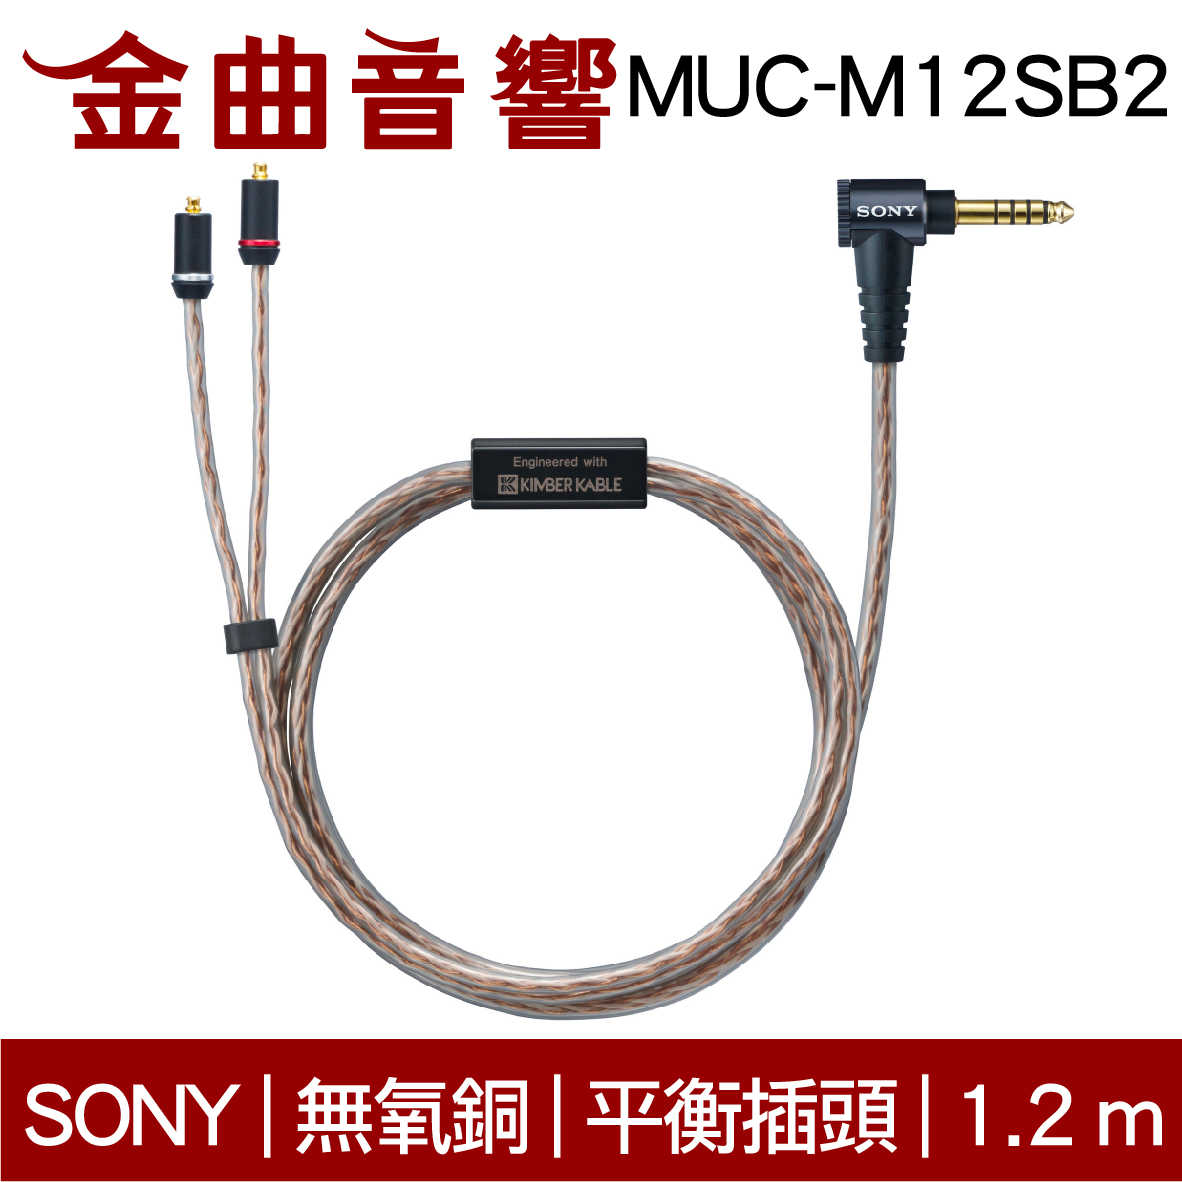 SONY IER-M7 + MUC-M12NB1 - オーディオ機器